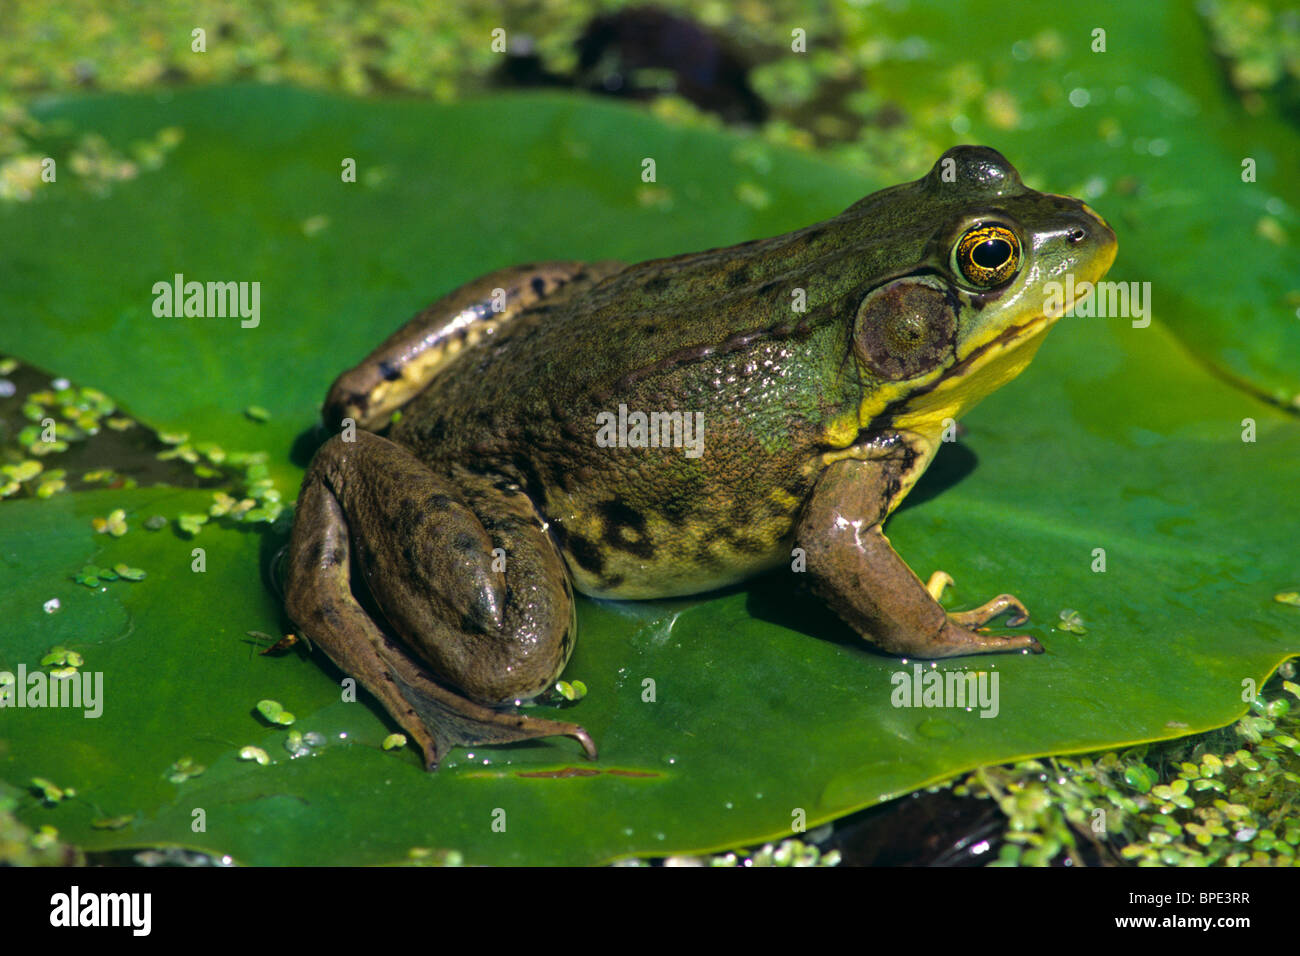 Green Frog Rana clamitans sitting on Water Lily pad Nymphaea odorata E USA Stock Photo